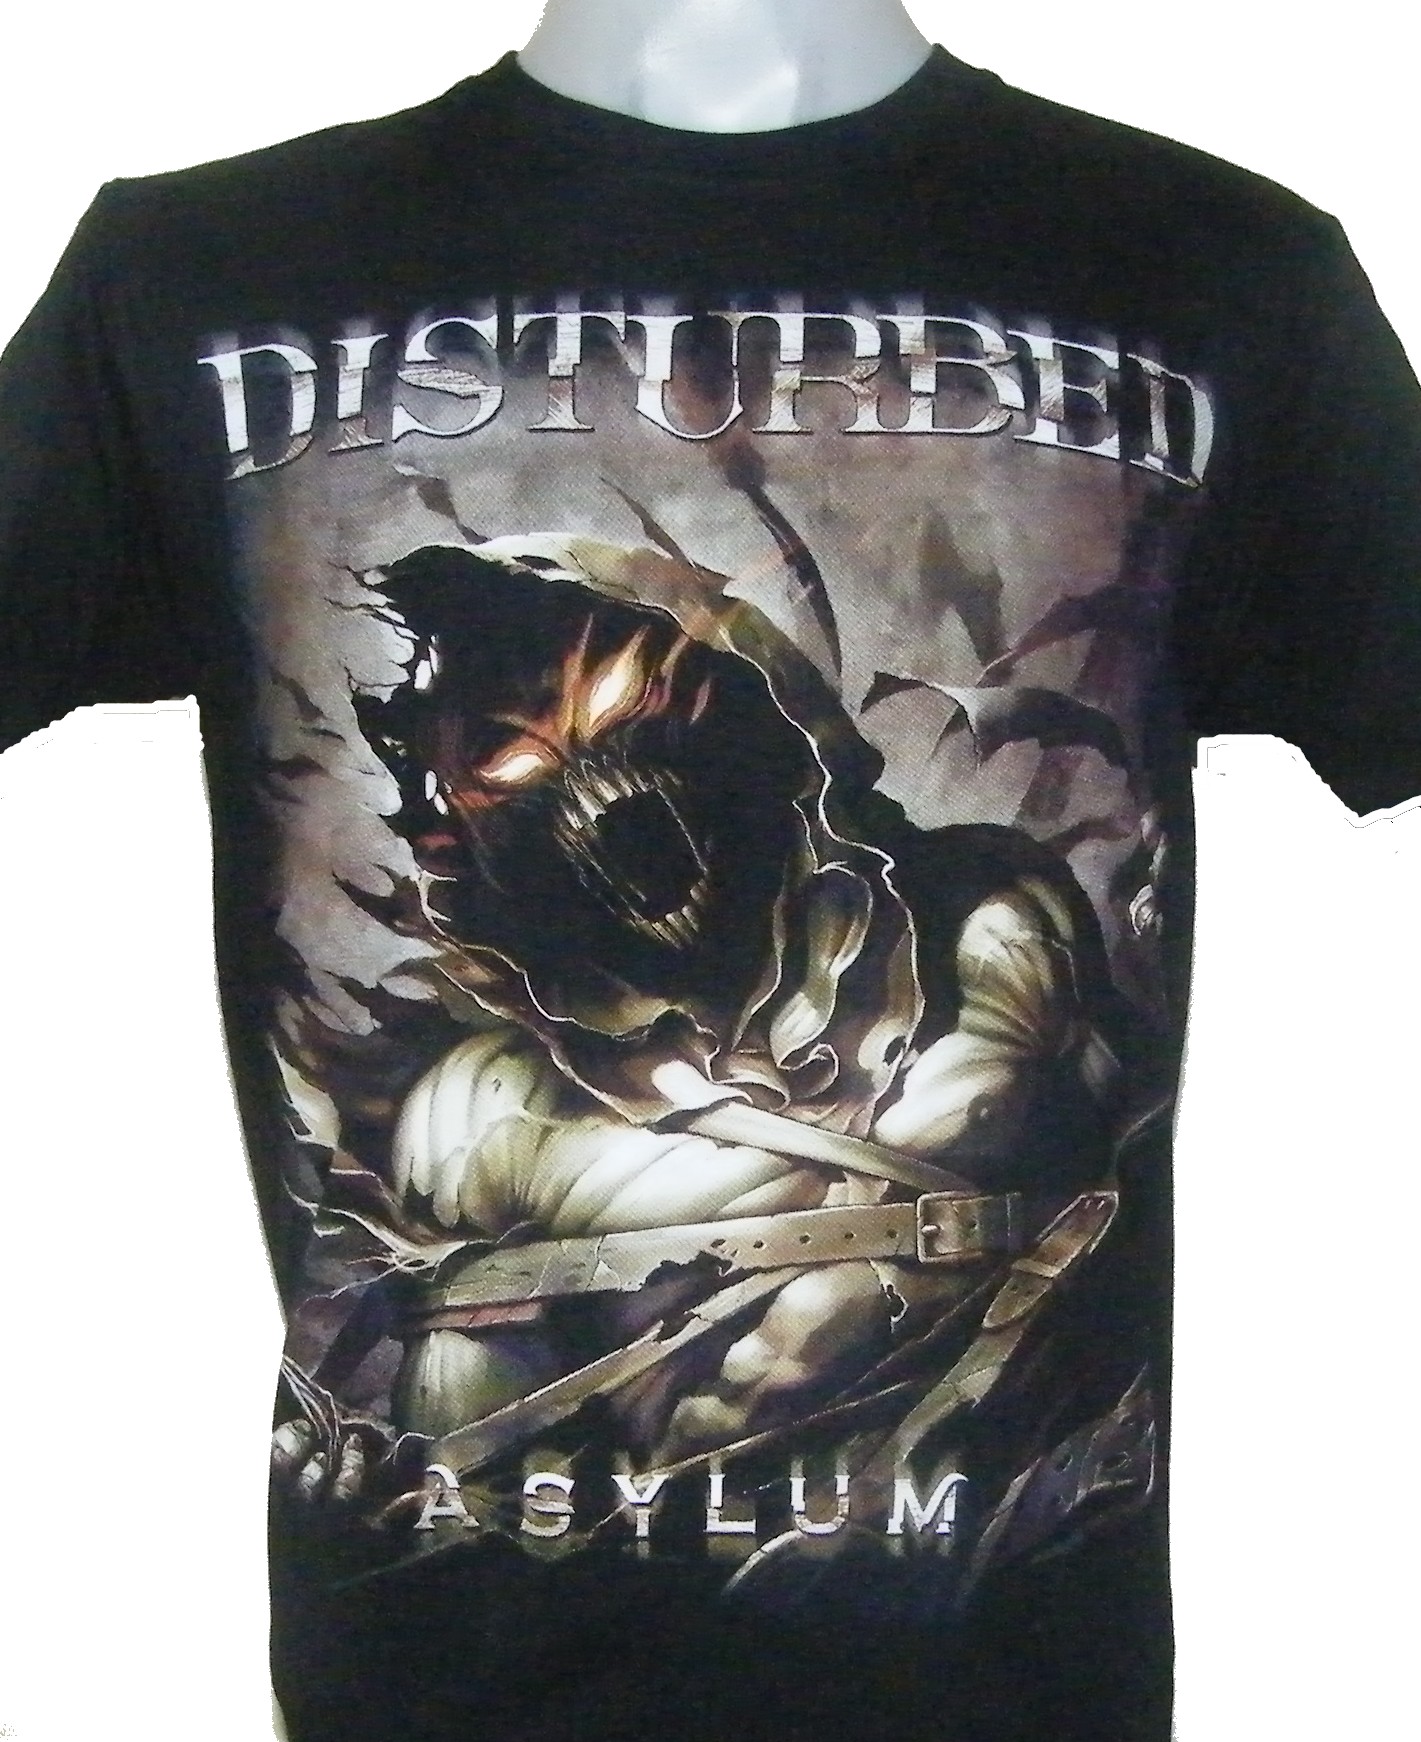 DISTURBED Asylum Shred T SHIRT S-M-L-XL-2XL Brand New Official T Shirt !!!